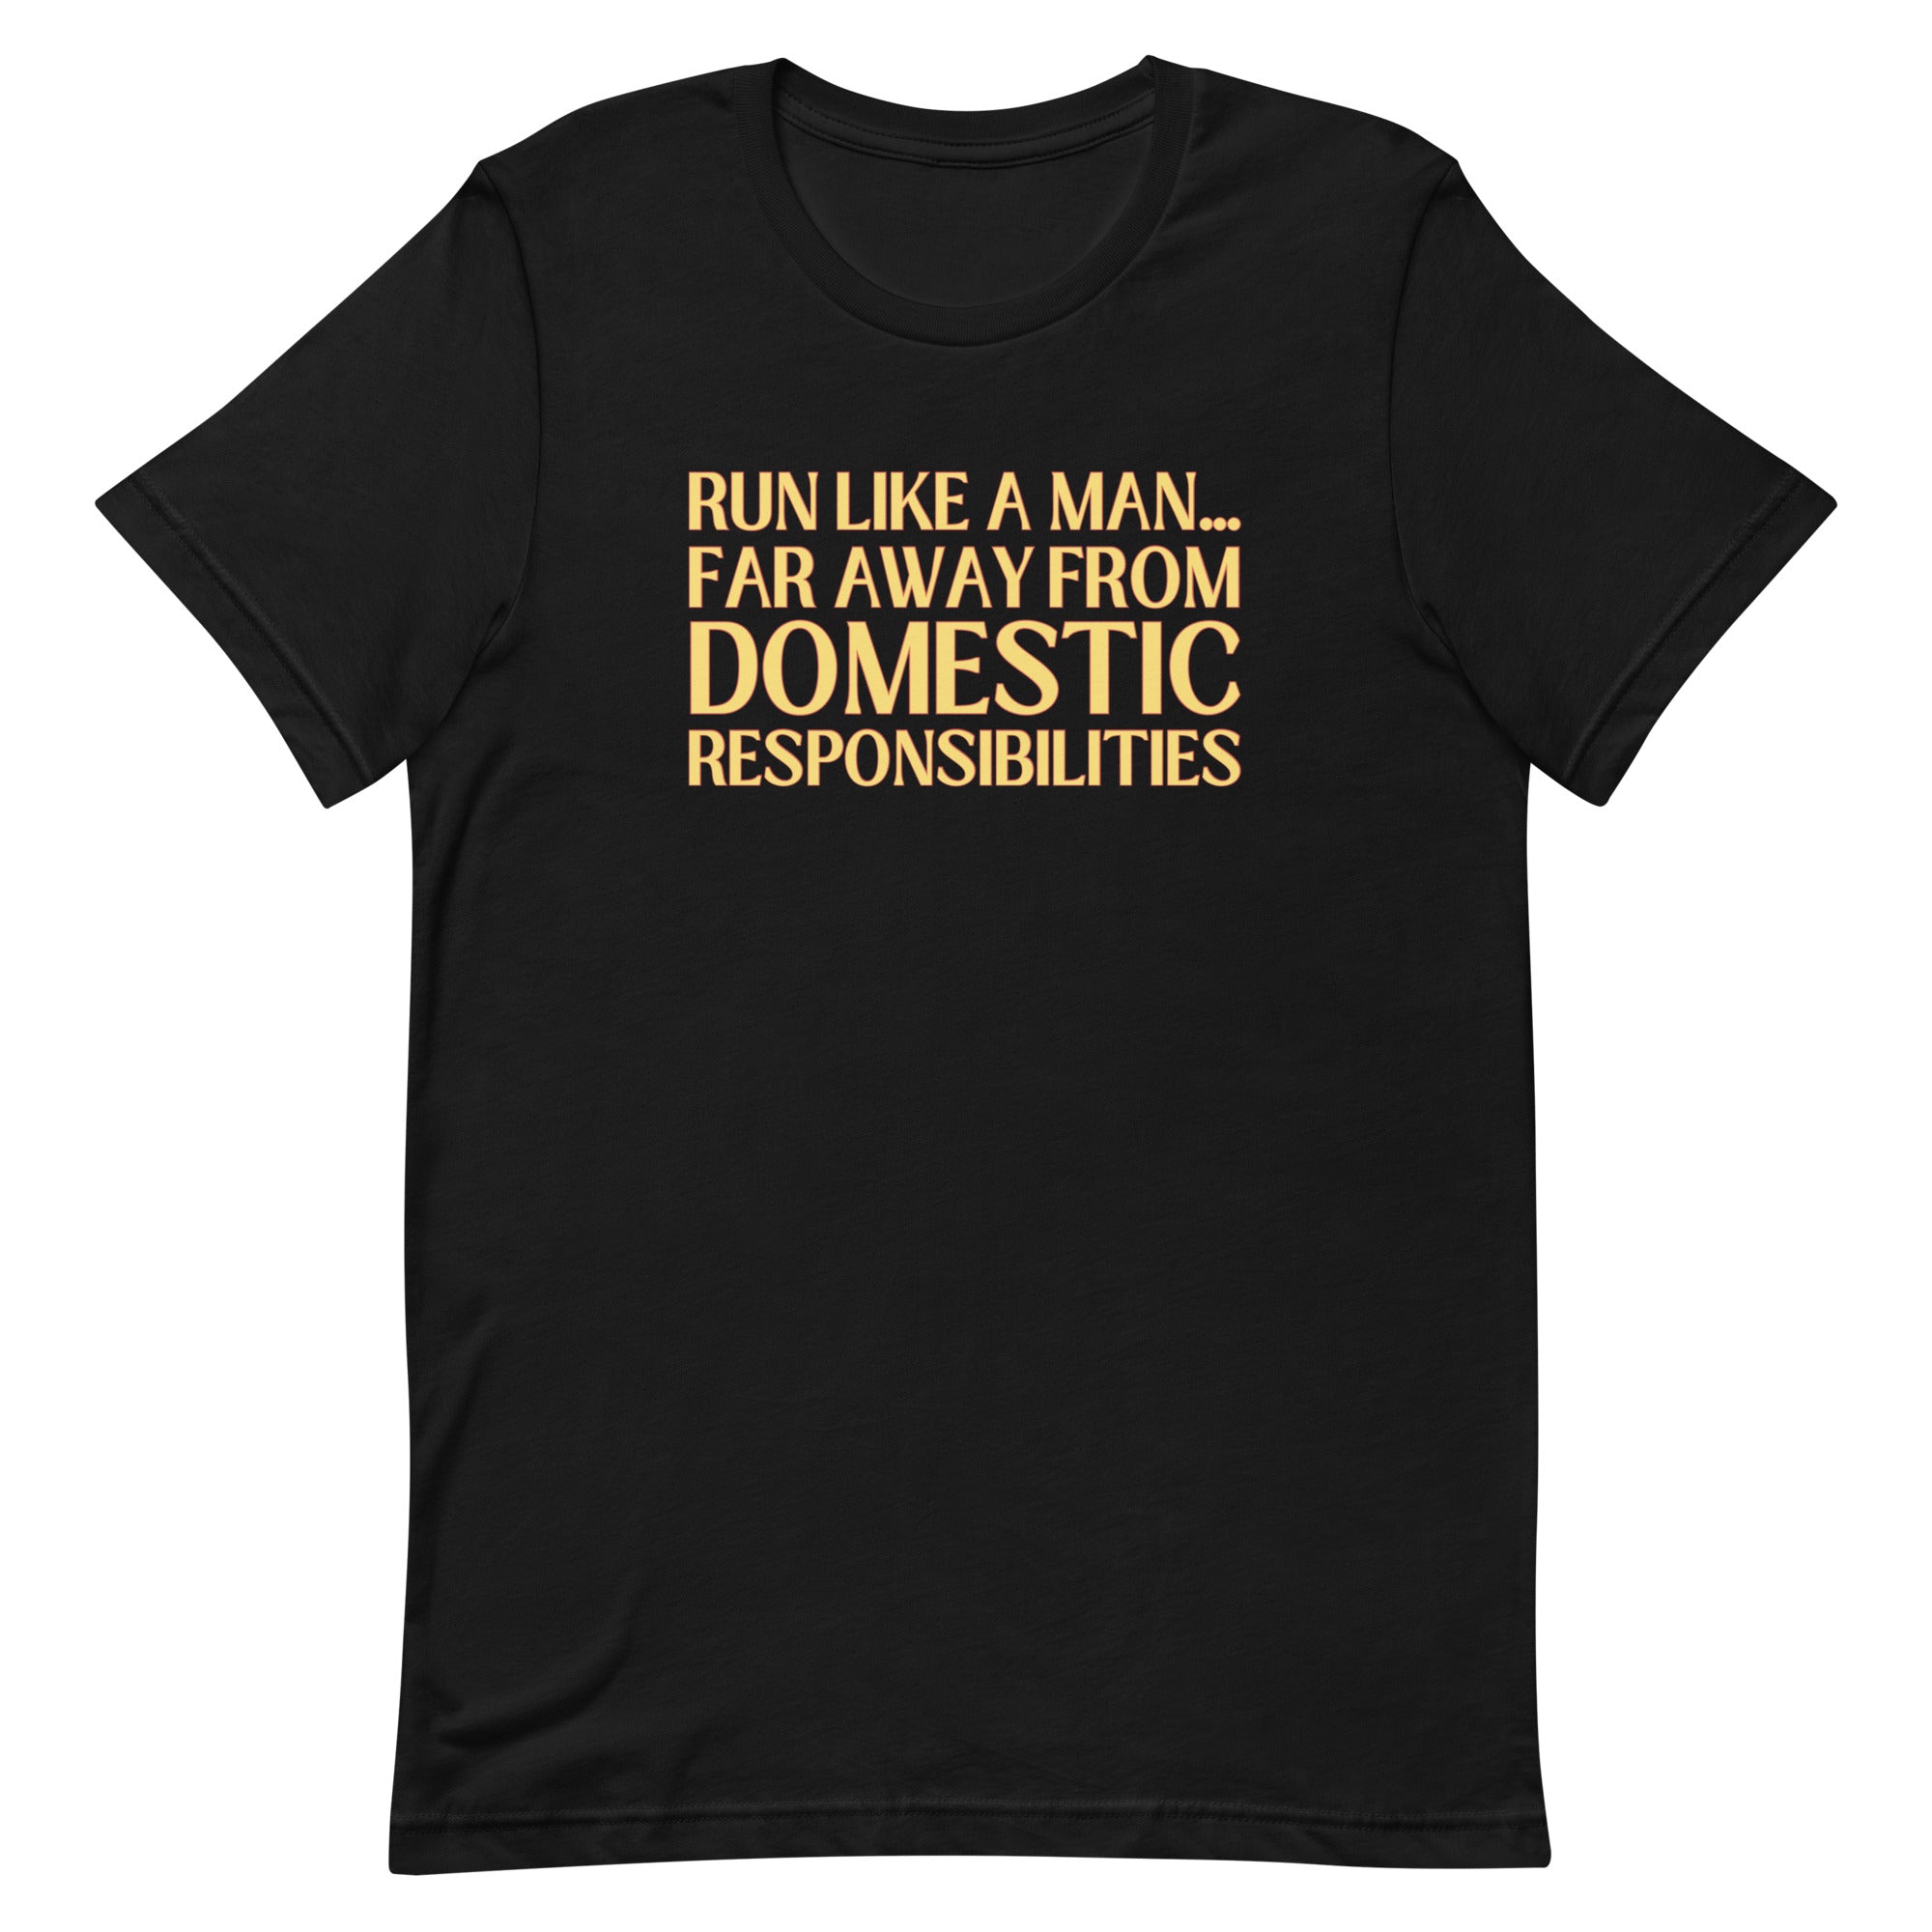 Run Like A Man Unisex Feminist t-shirt - Shop Women’s Rights T-shirts - Feminist Trash Store - Black